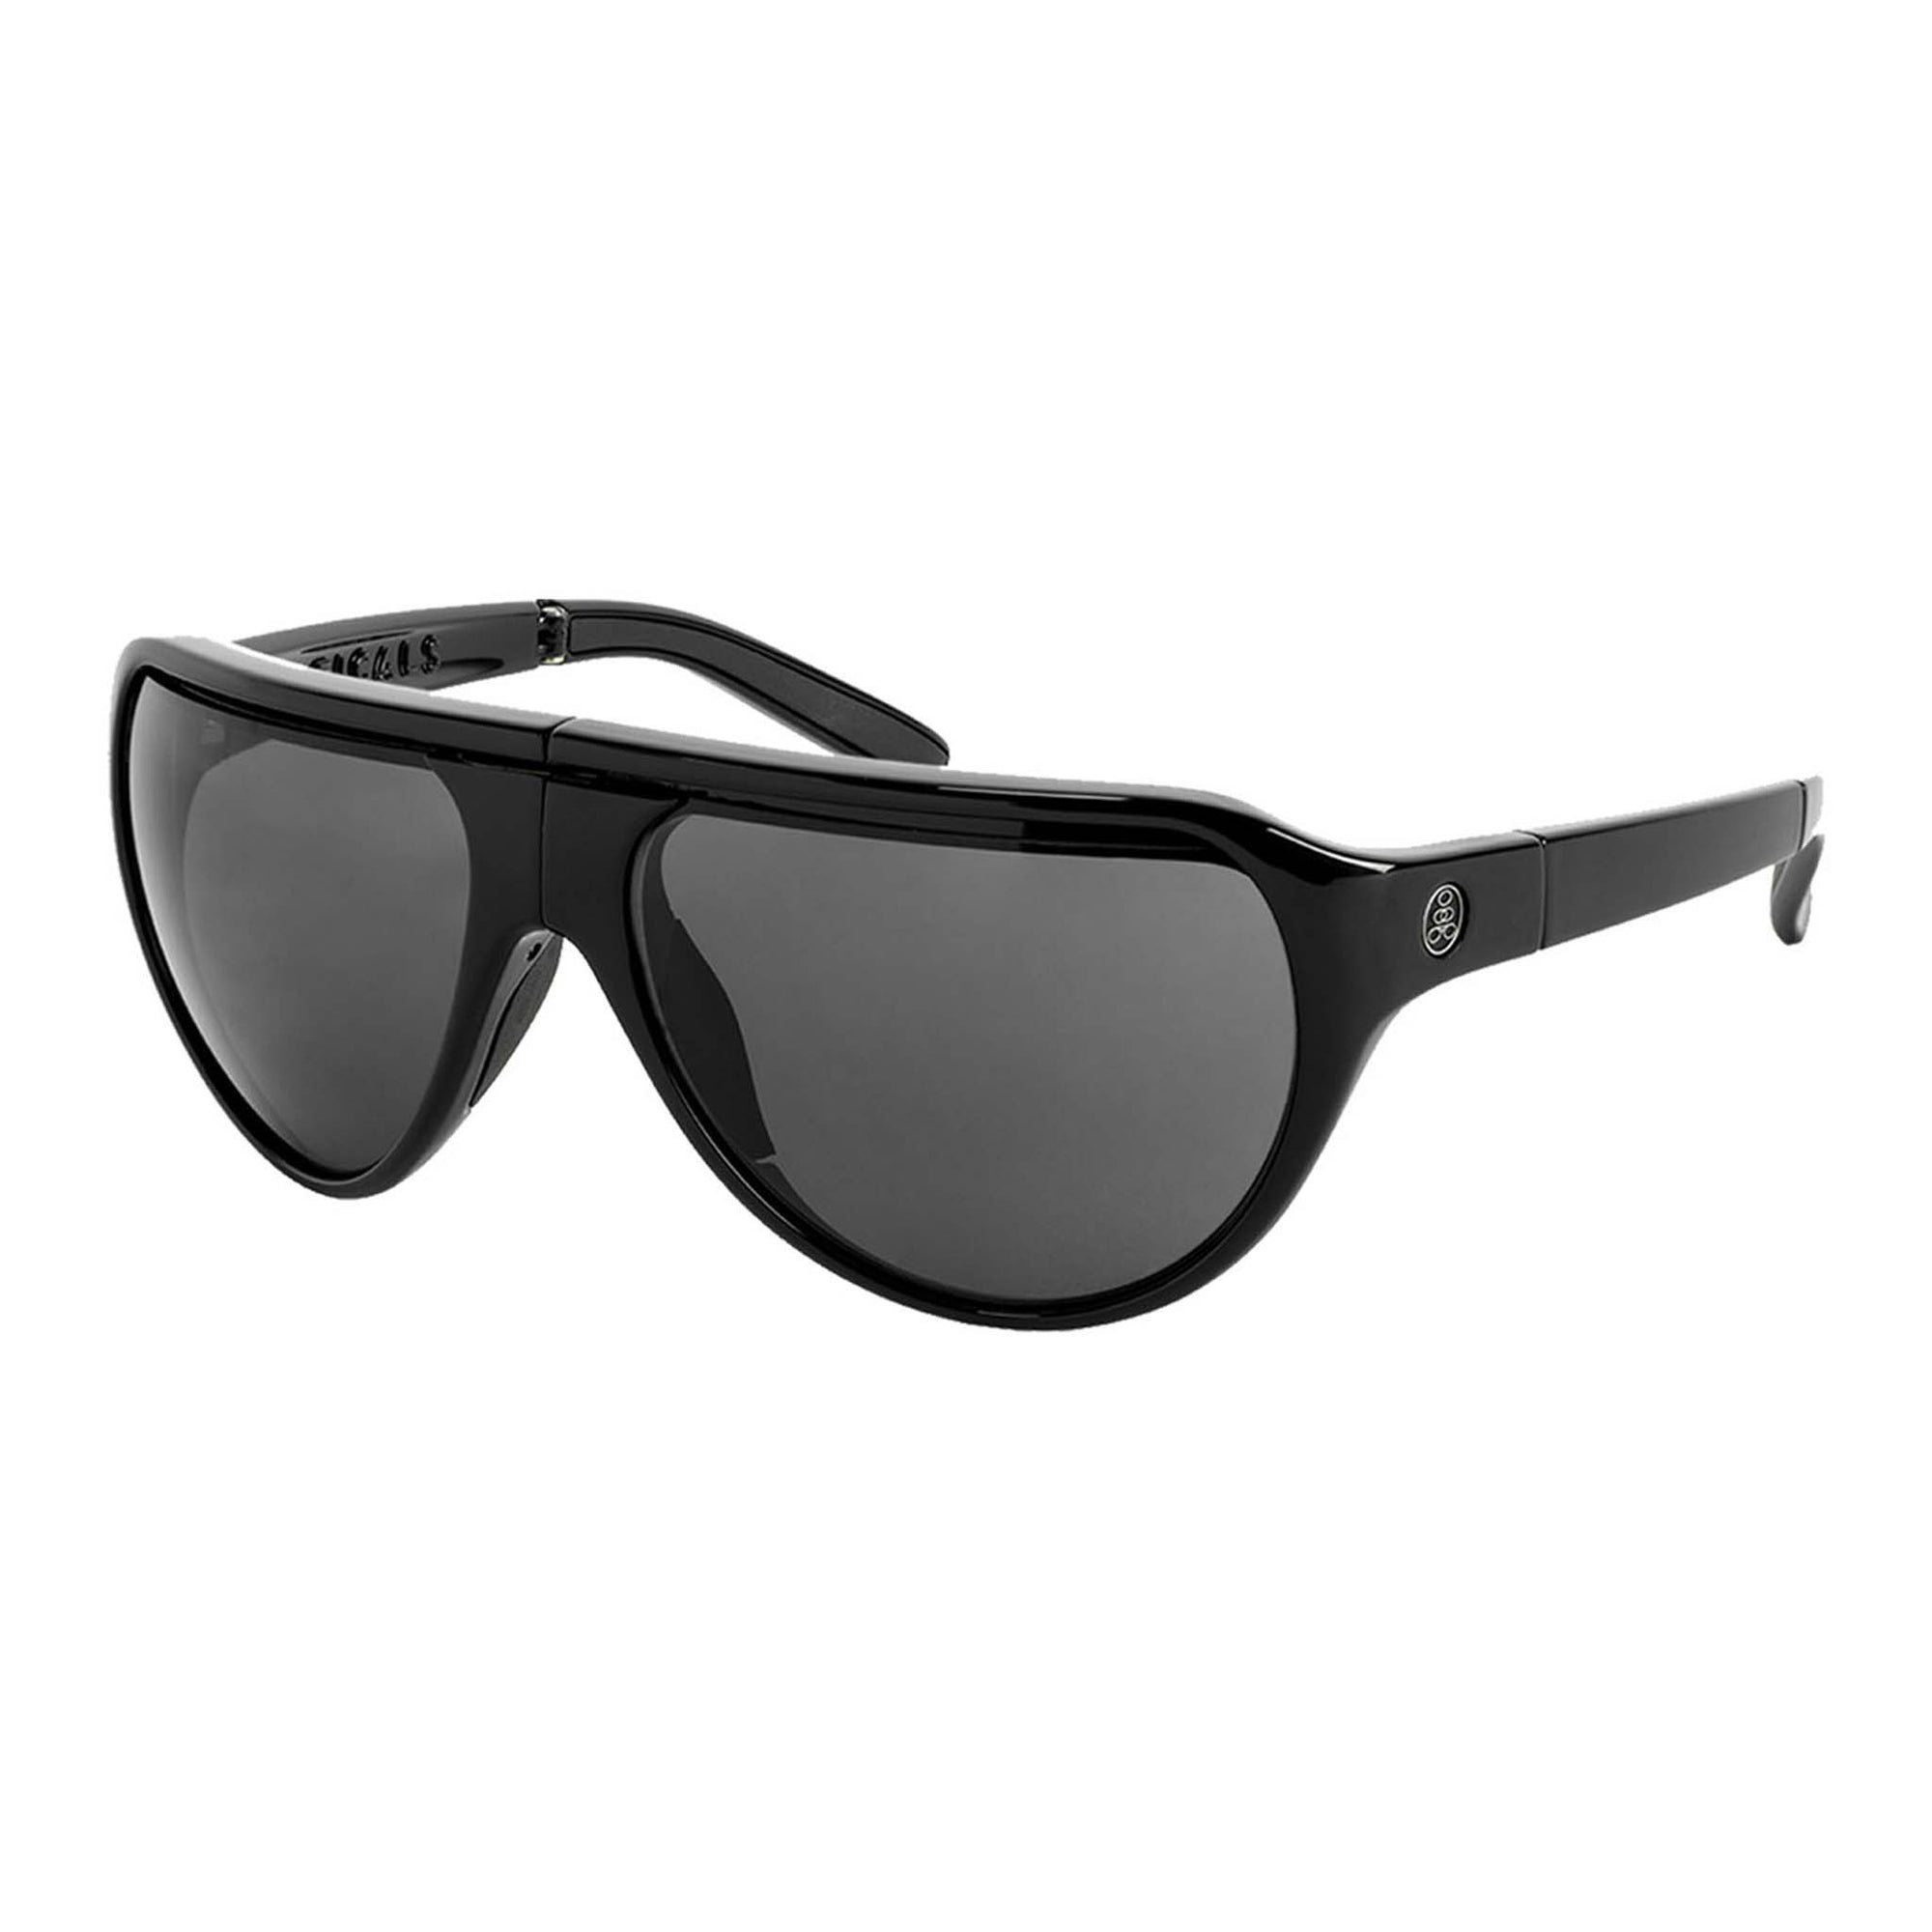 Popticals, Premium Compact Sunglasses, PopAir, 300010-BGGS, Standard Sunglasses, Gloss Black Frame, Gray Lenses, Glam View